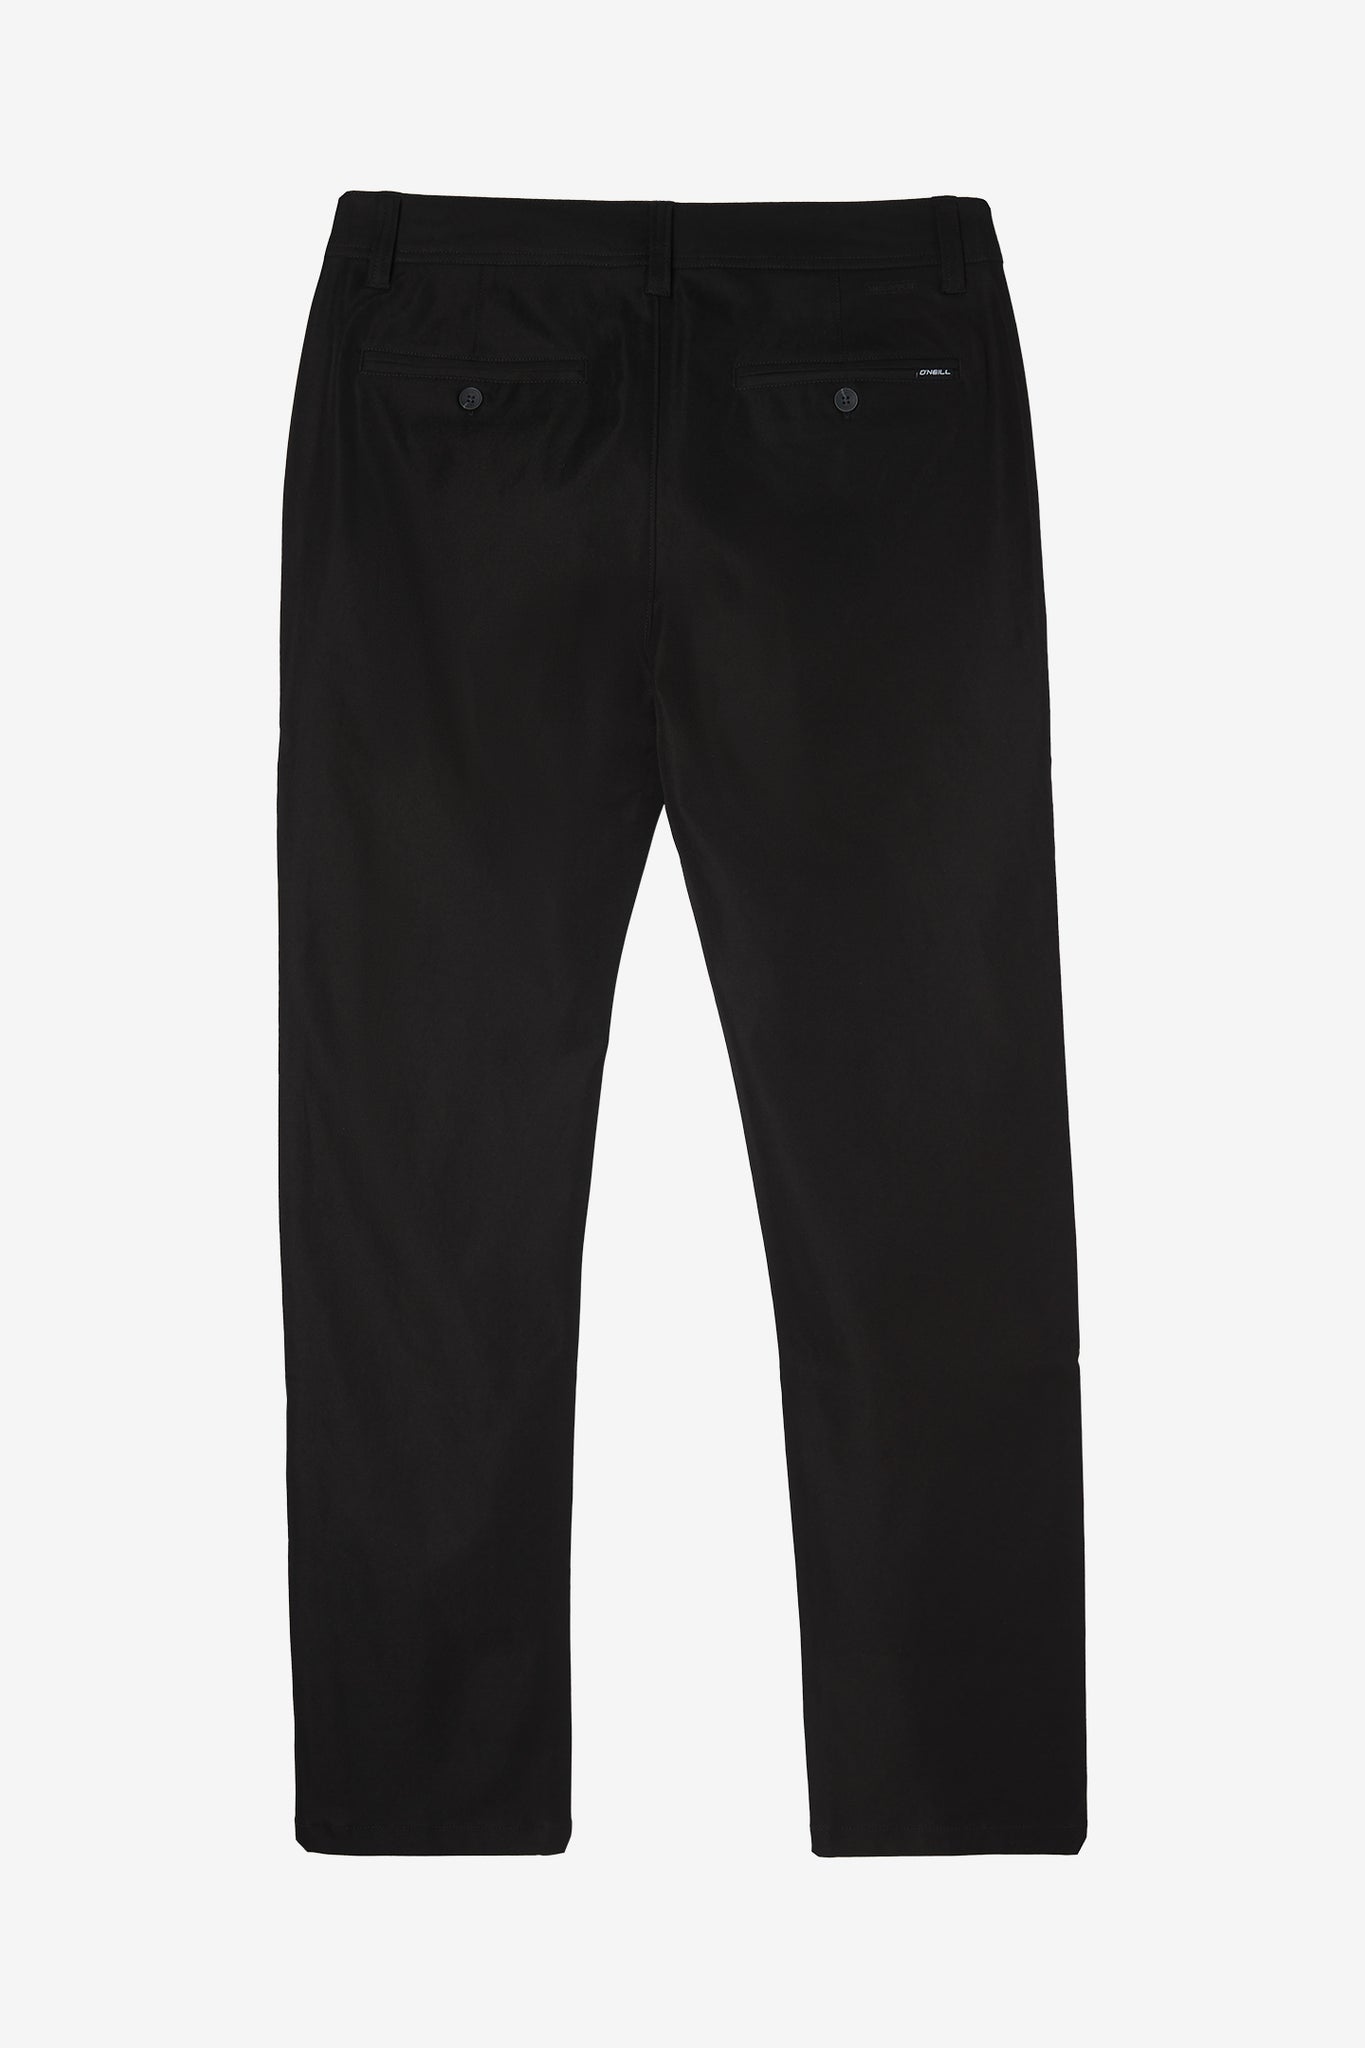 Men's Hybrid Winter Pants - All in Motion™ Black XXL/3XL